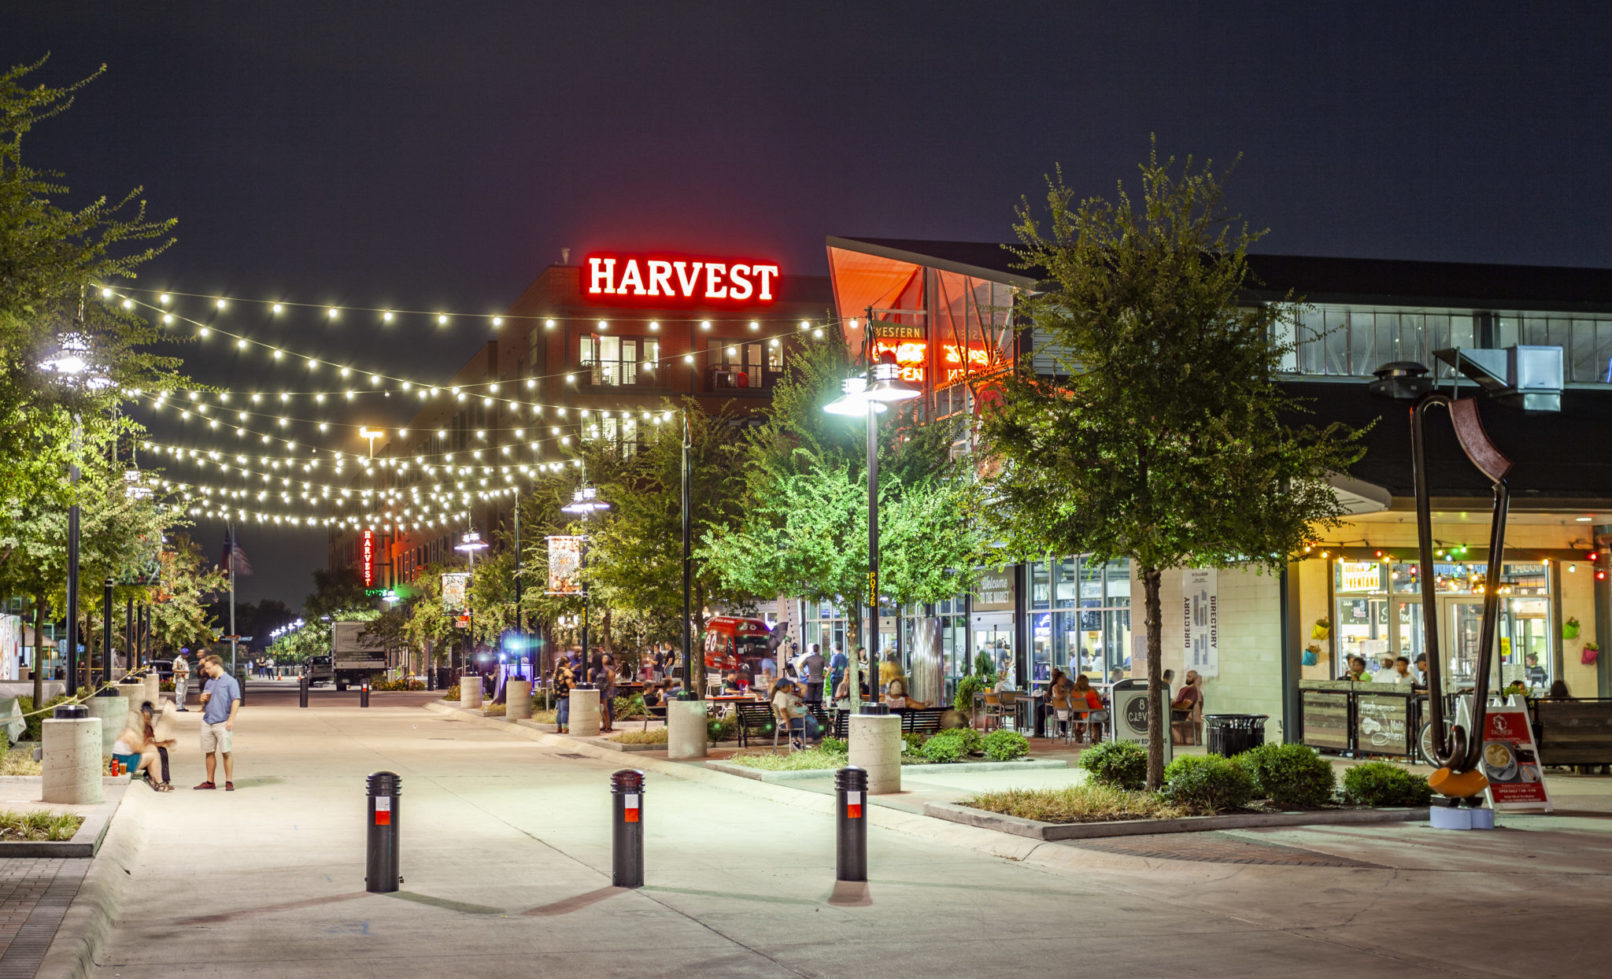 RLG Dallas Farmers Market - Harvest Lofts at Night with string lights